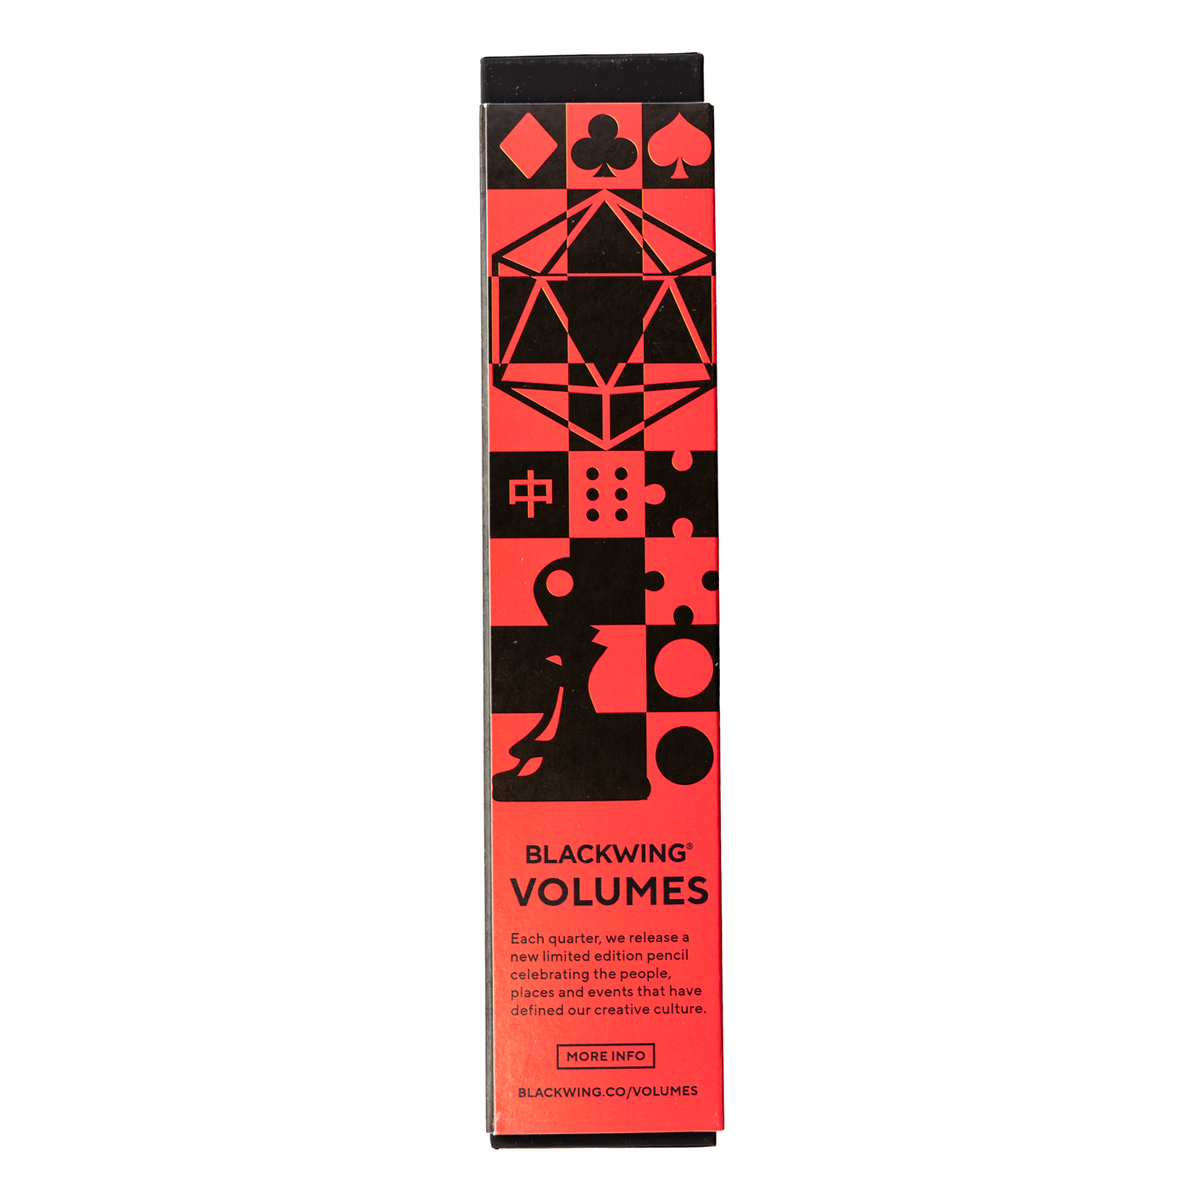 Blackwing Volume 20 Volumes